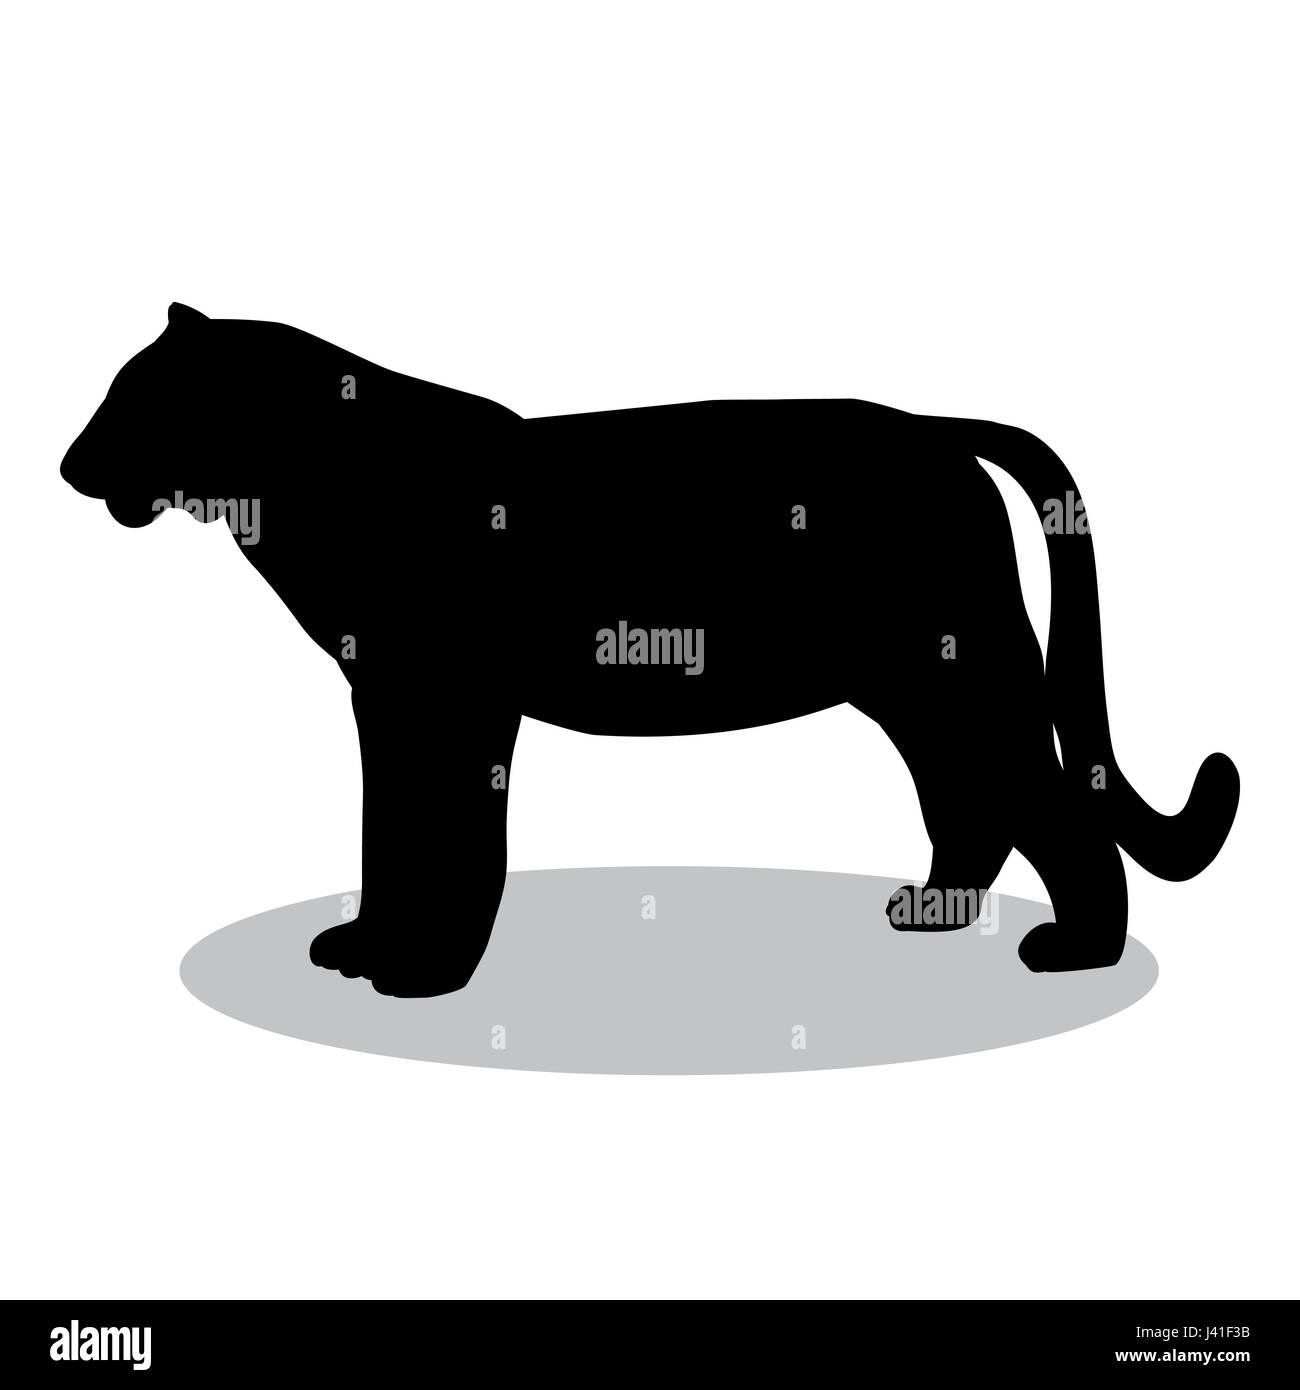 Tiger wildcat black silhouette animal Stock Vector